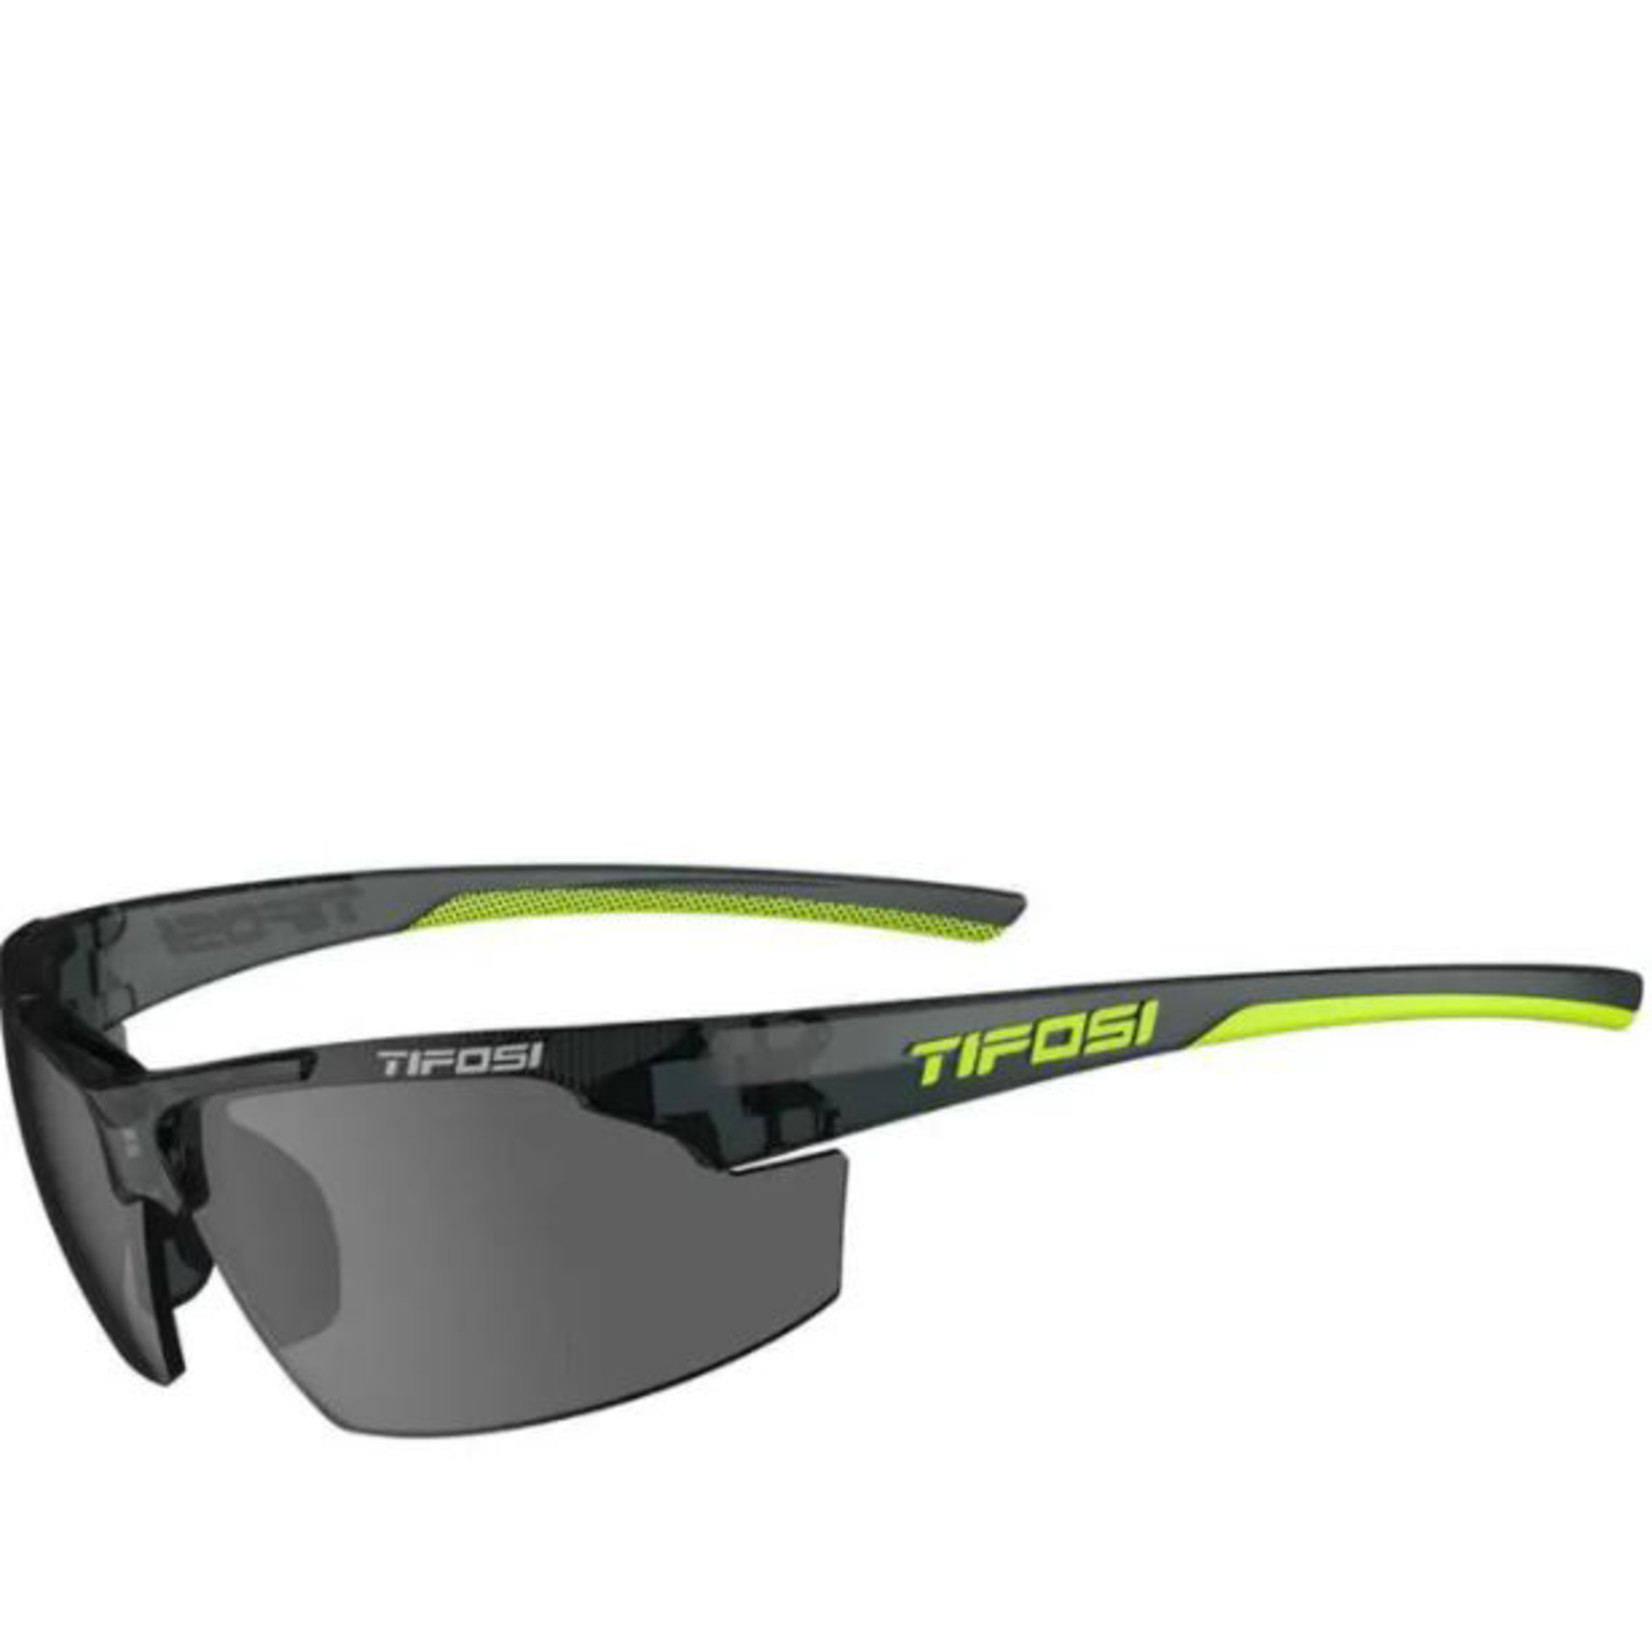 Tifosi Tifosi Cycling Sunglasses - Track - Crystal Smoke UV Resistant